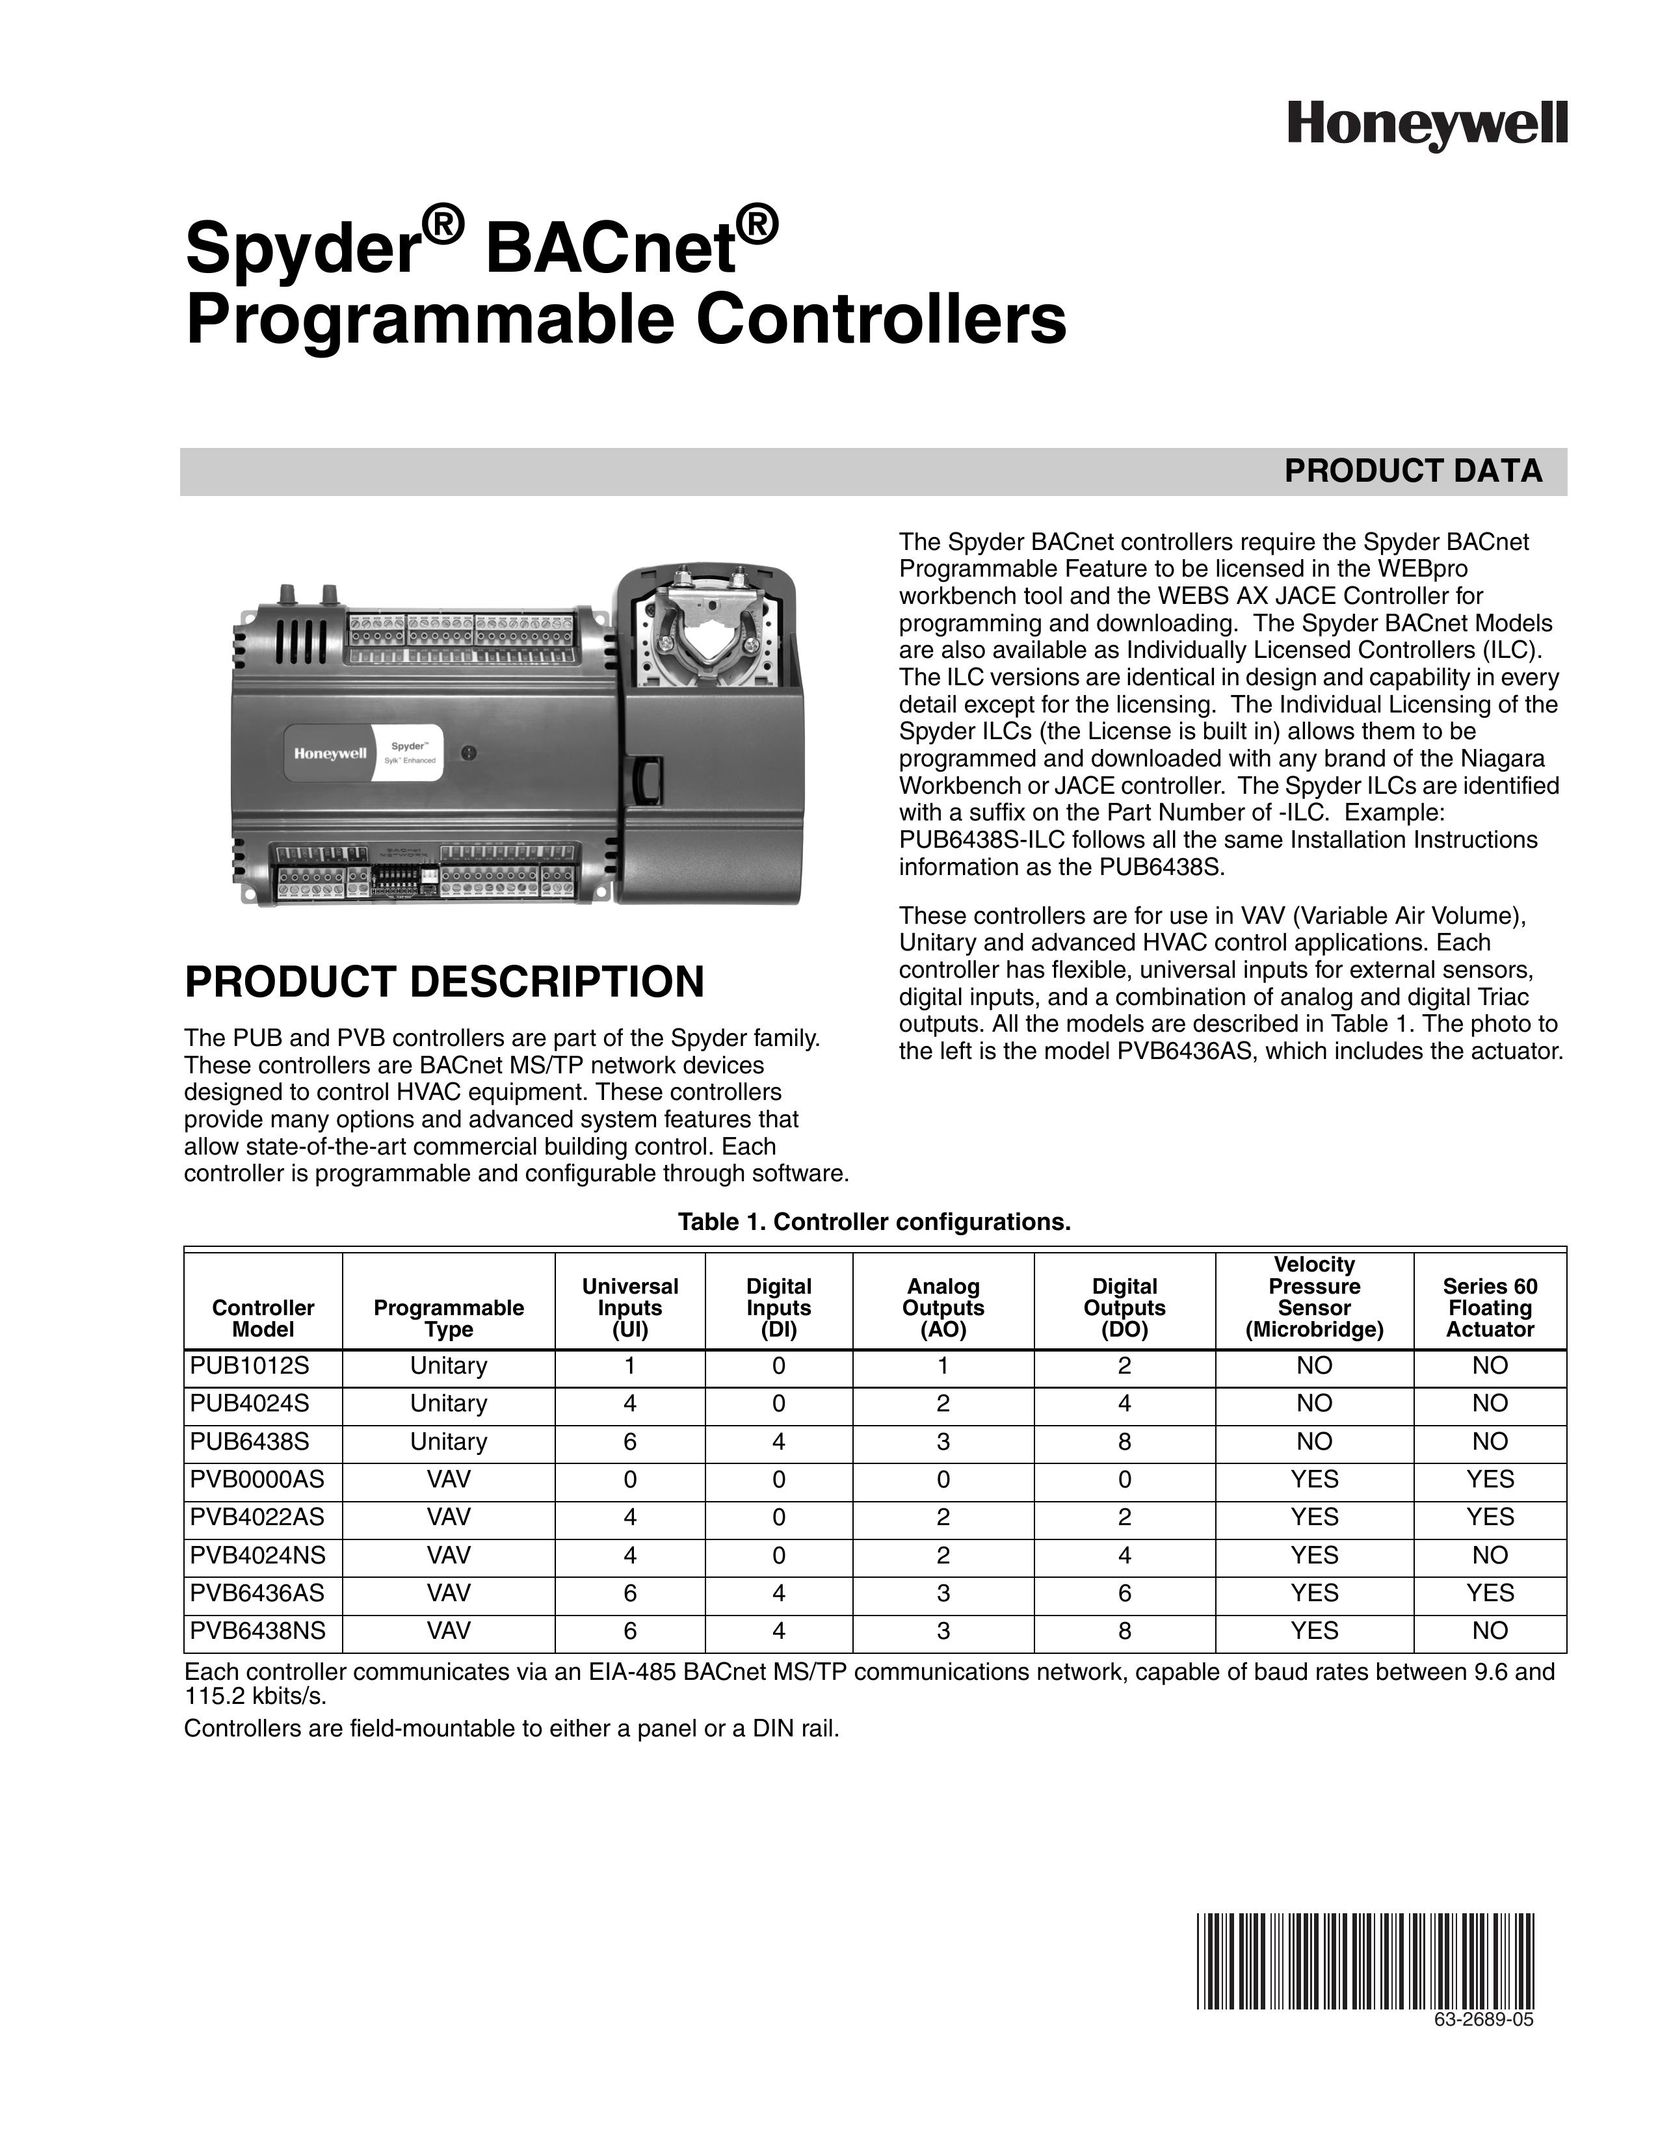 Honeywell PVB4022AS Universal Remote User Manual